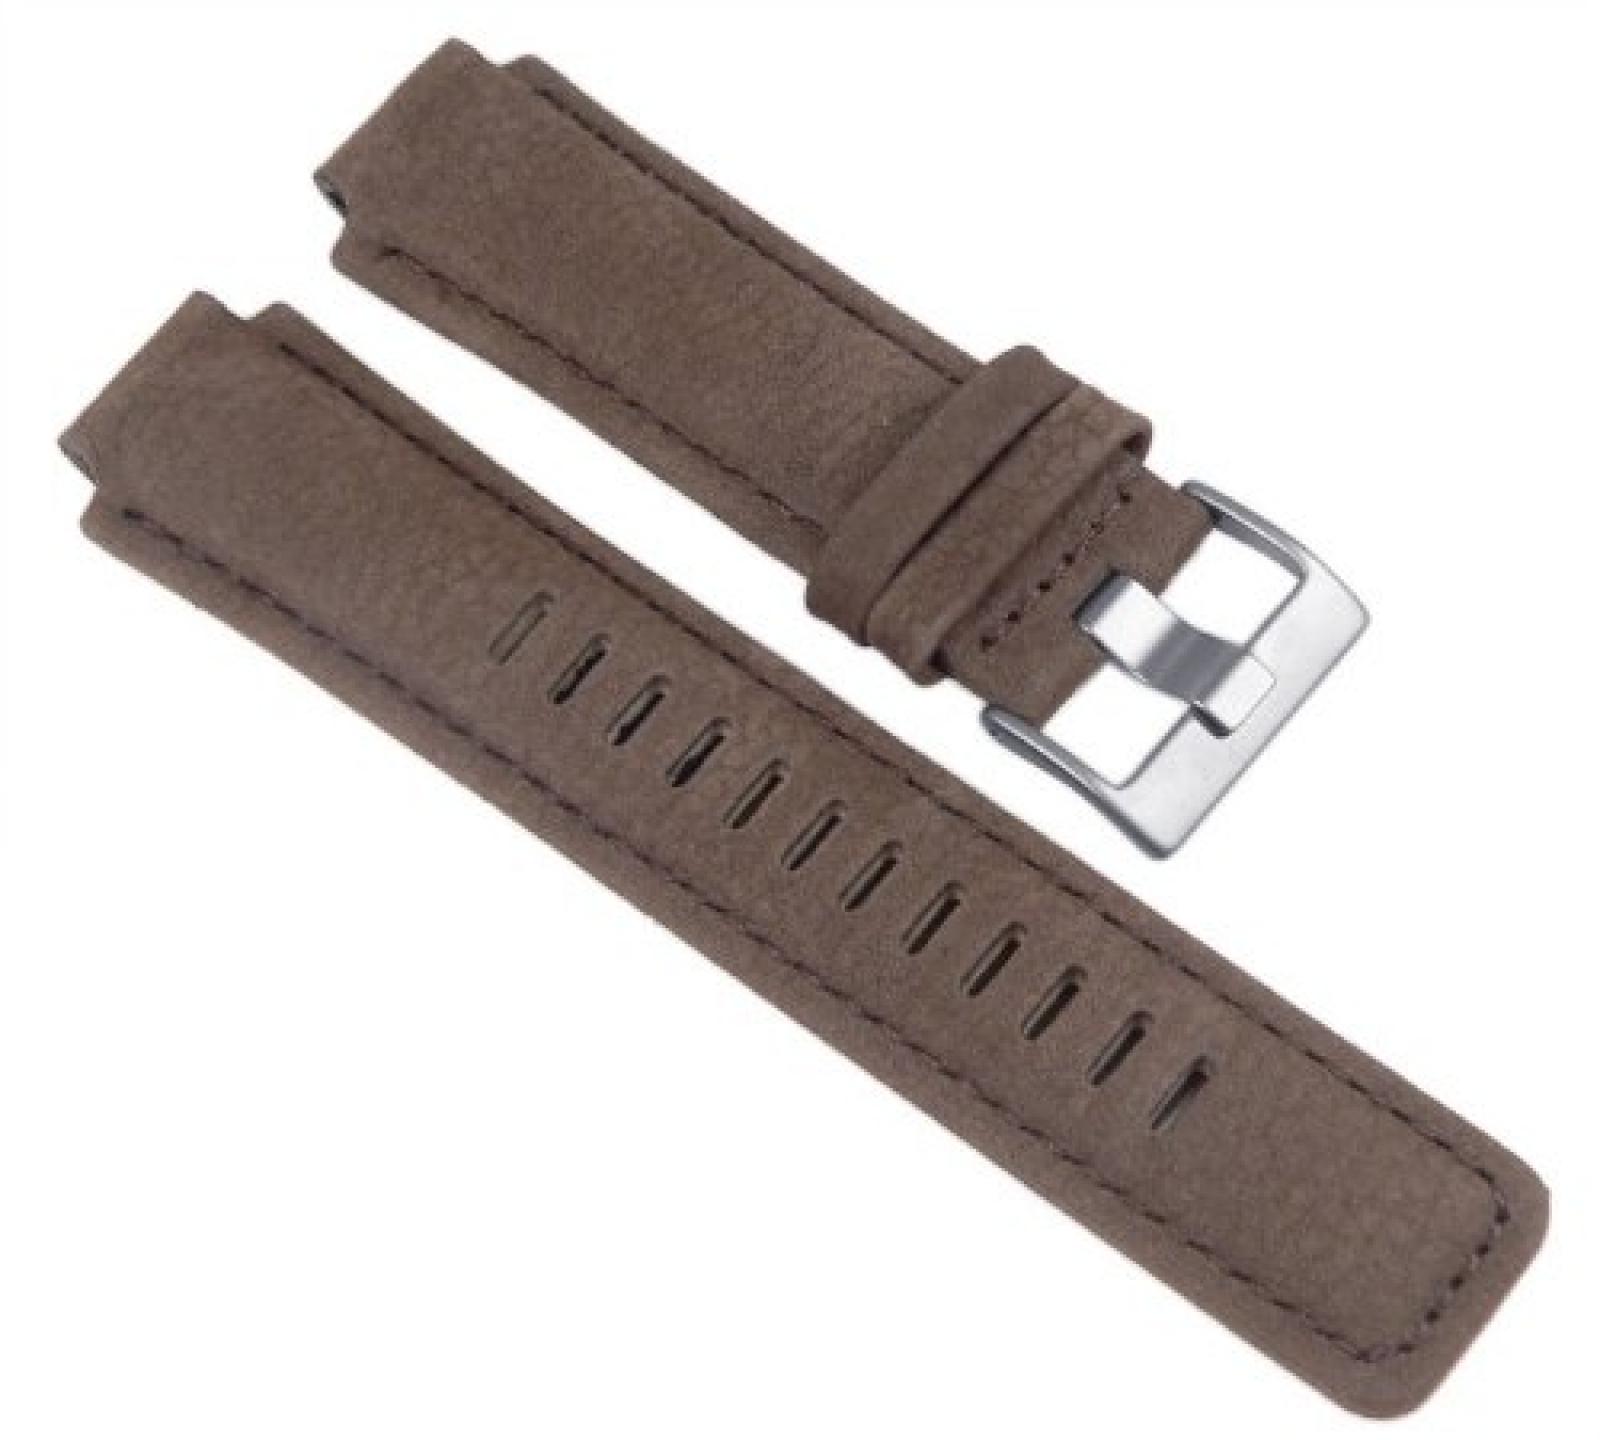 Timex Marken Ersatzband Uhrenarmband Leder Wasserfest Braun 16mm für T2N721, T2N739, T2P141, T2N720, T2N722, T2N723, T49709 